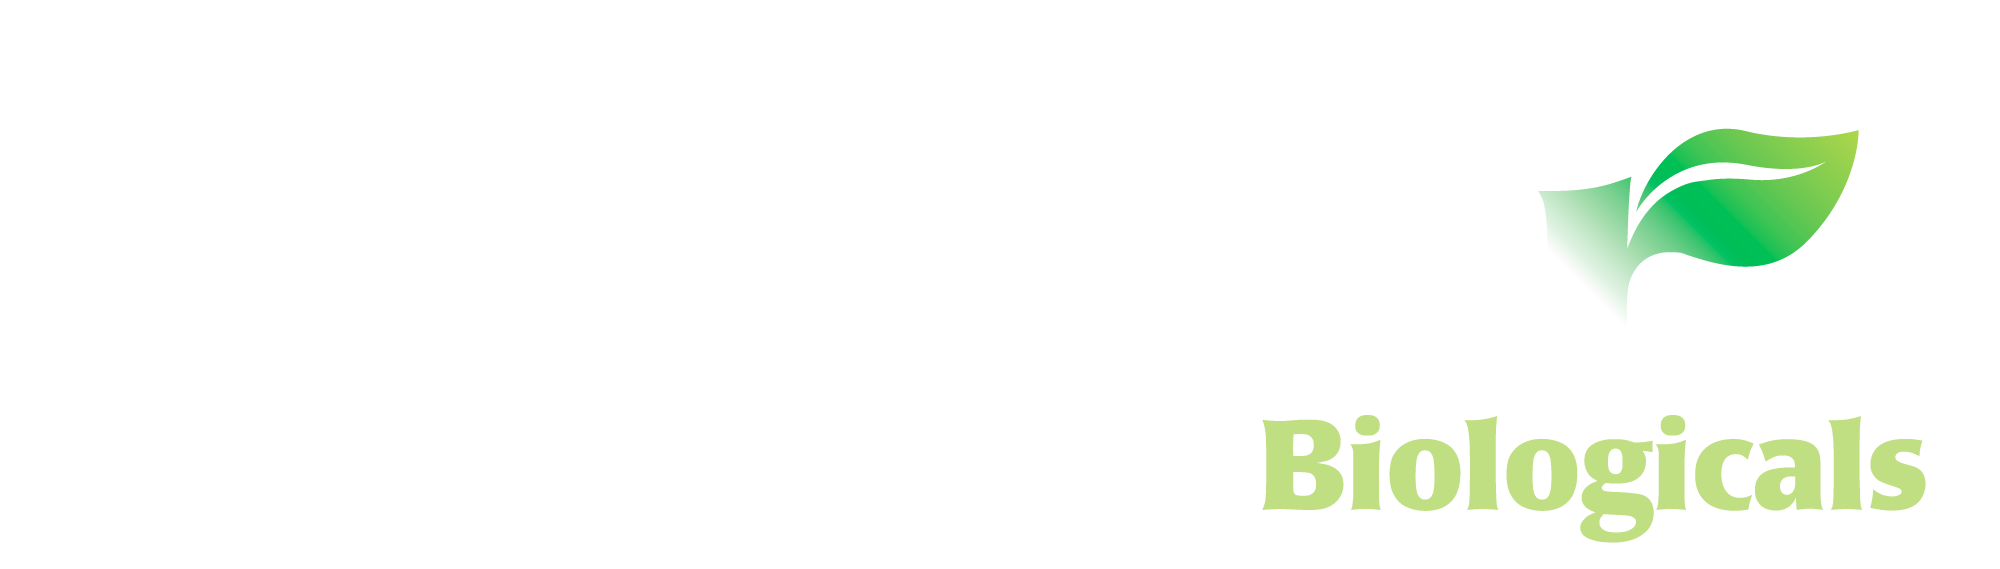 green and white phone logo